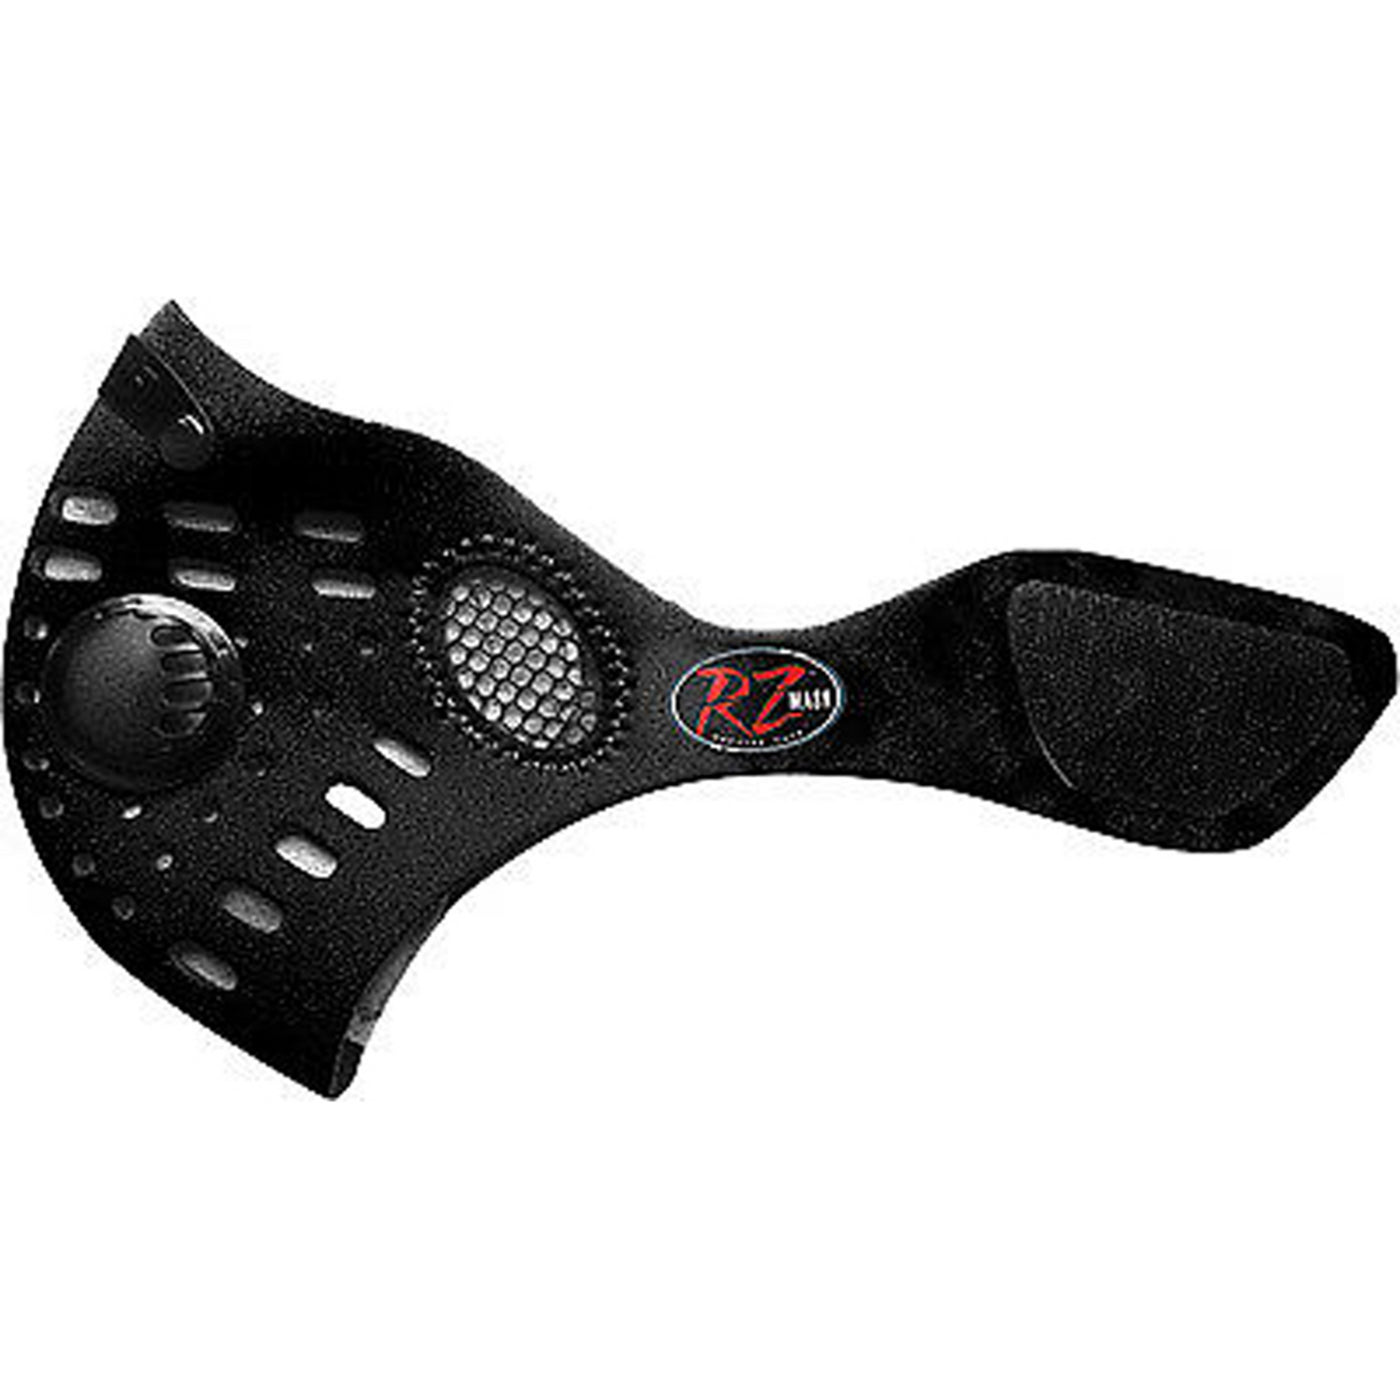 Rz Mask 24.95 M1 Neoprene Youth Mask - Black Medium #83382